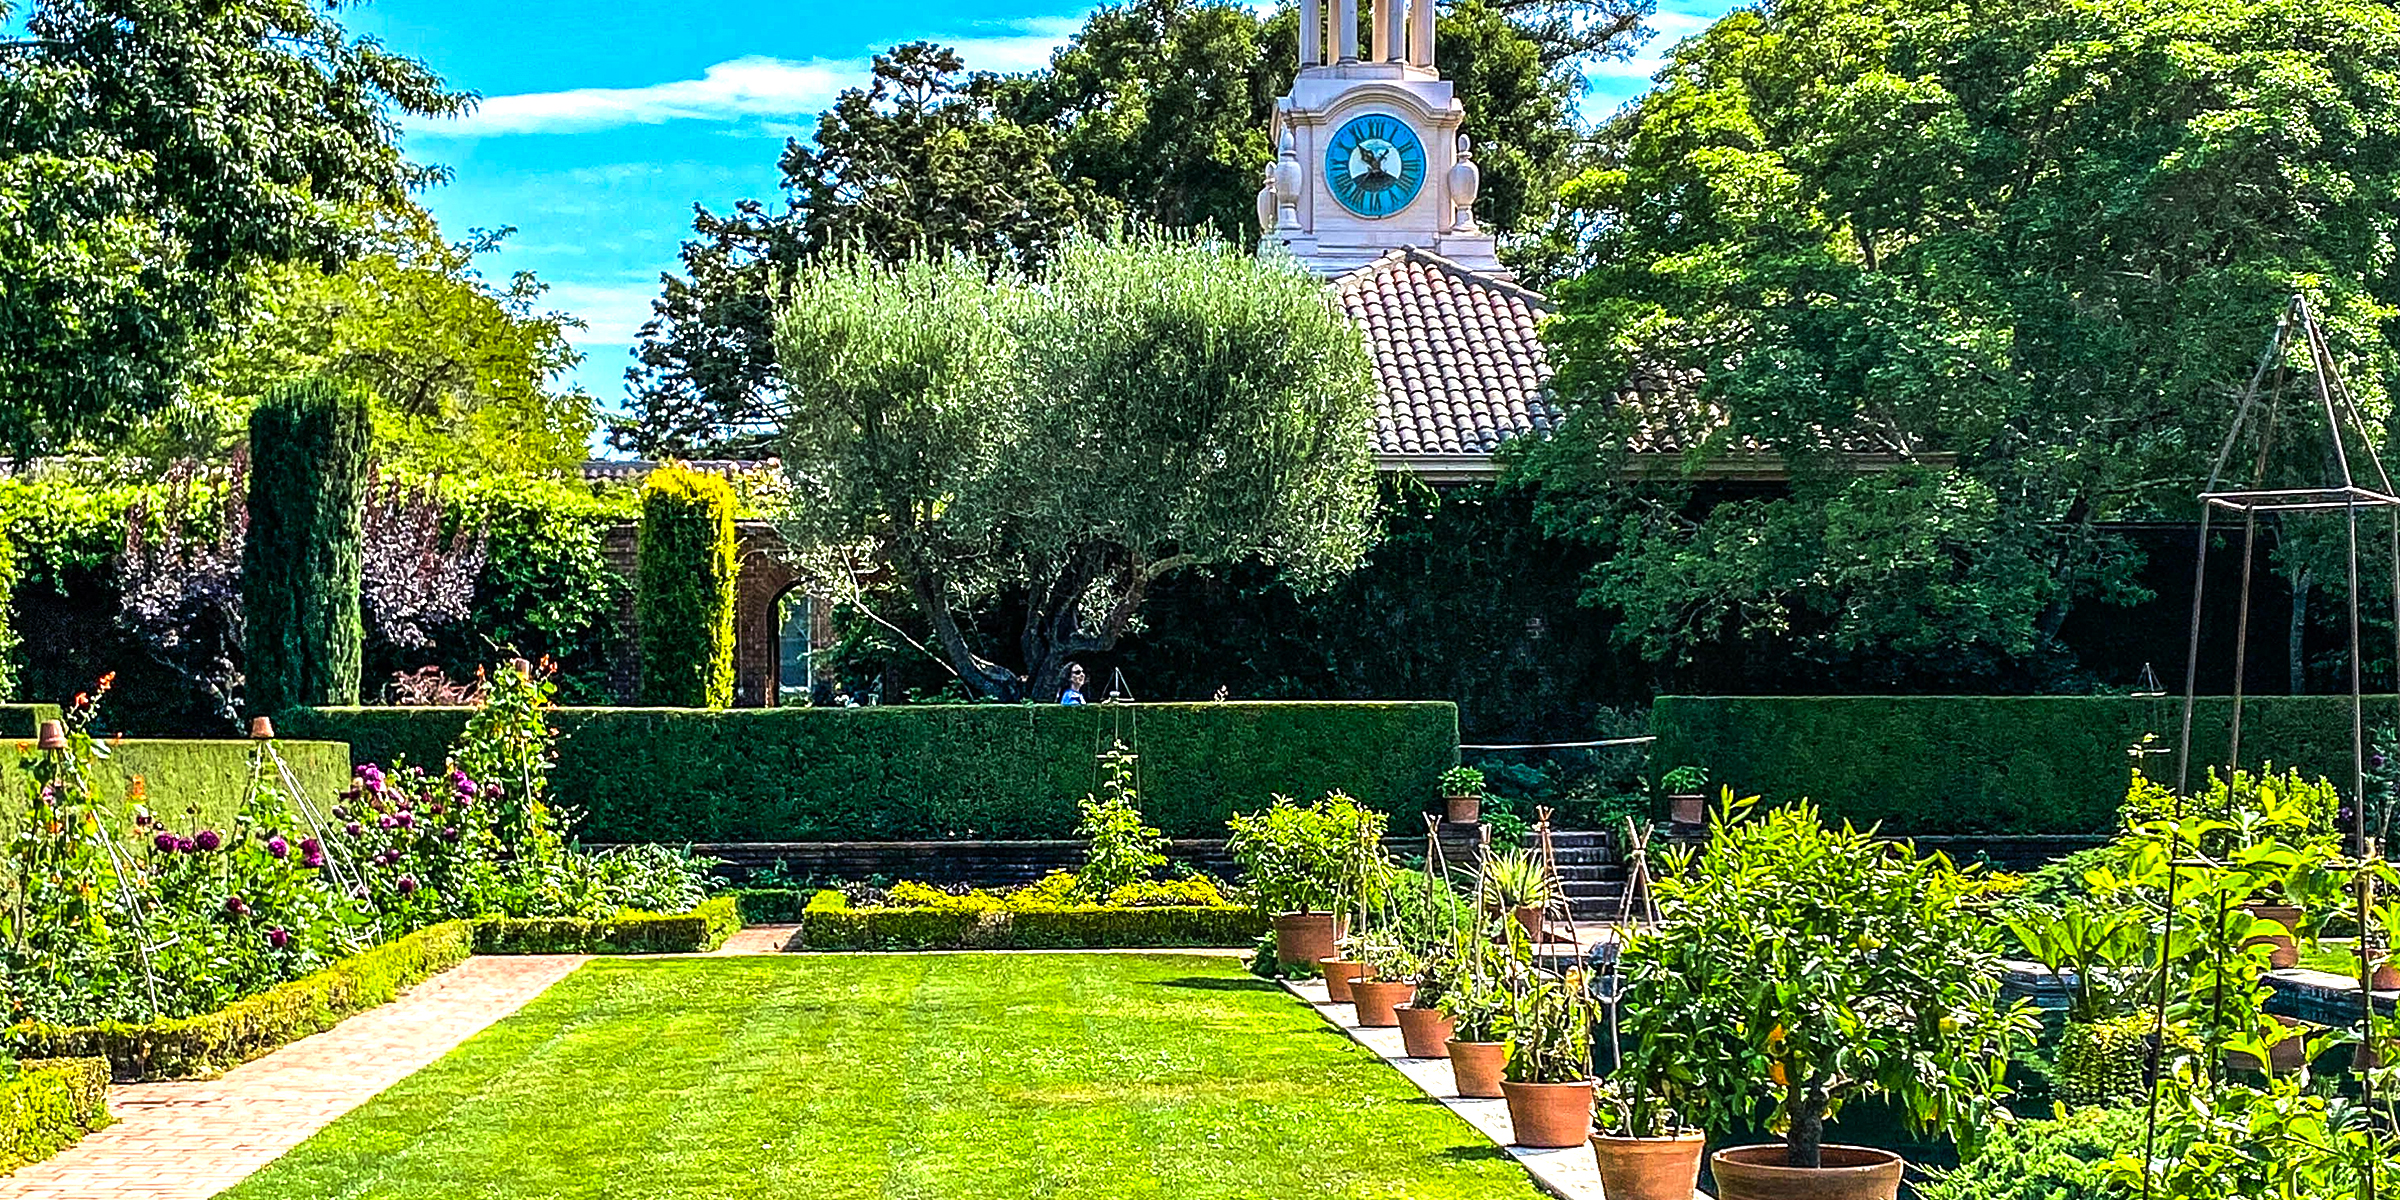 A picturesque Filoli Gardens in Woodside, California.